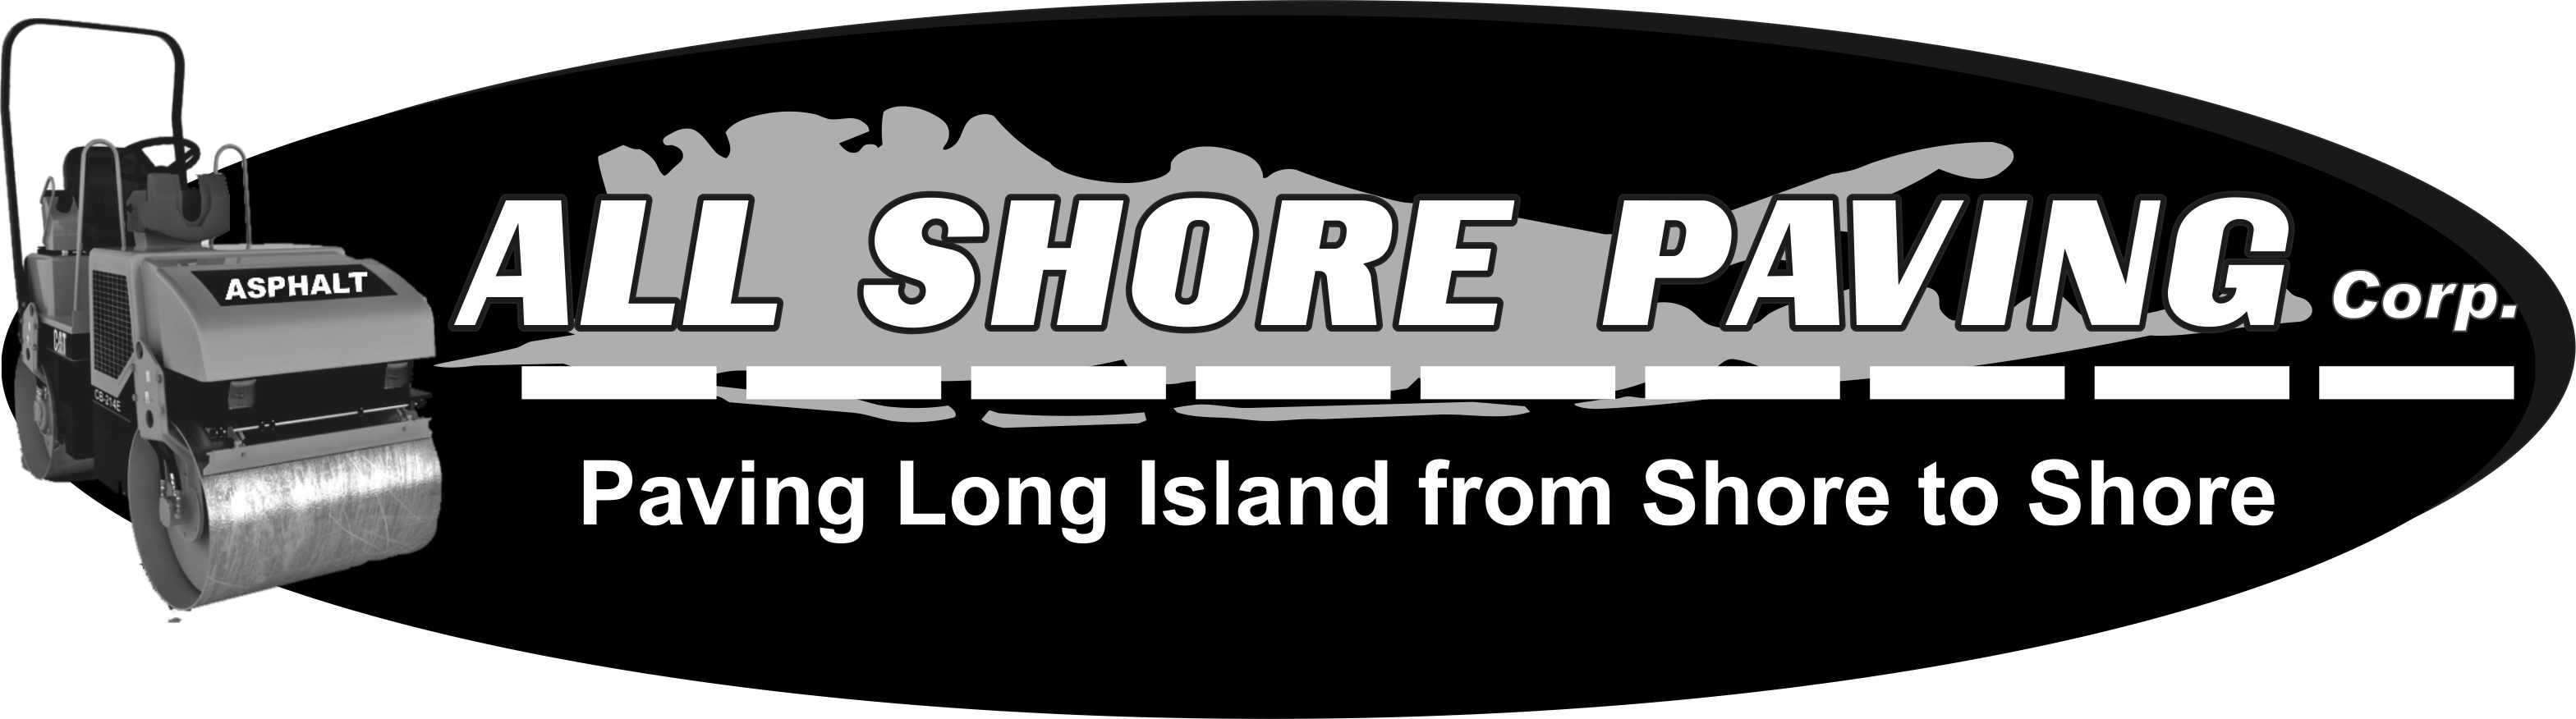 All Shore Paving, Corp. Logo